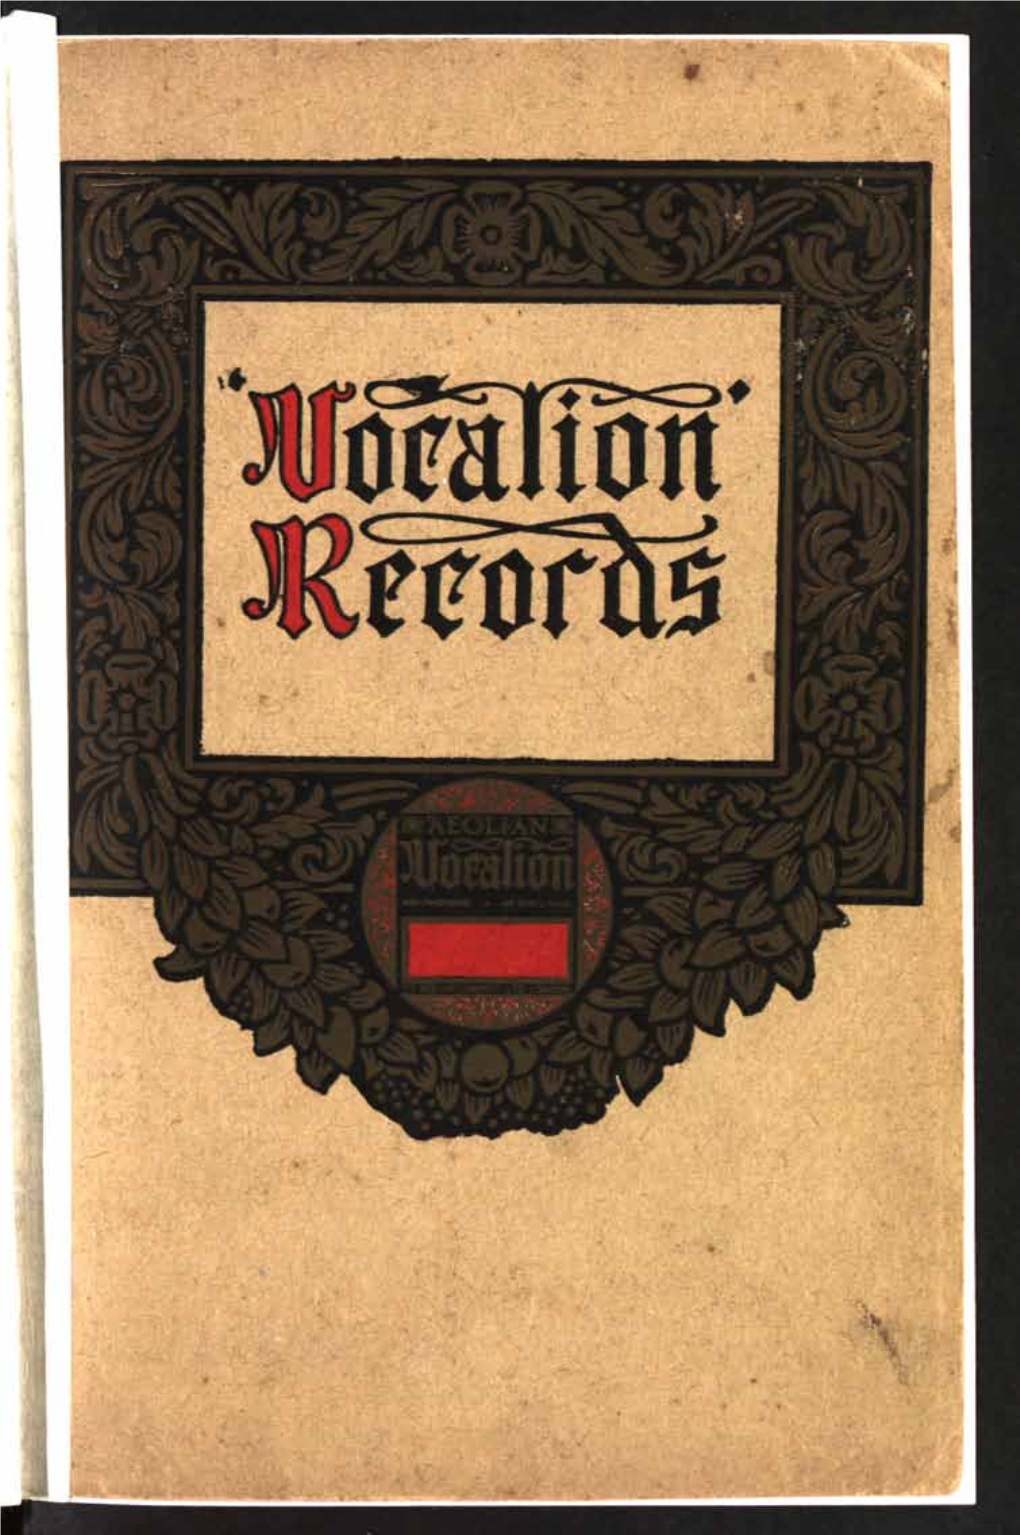 Aeolian-Vocalion Records 1924